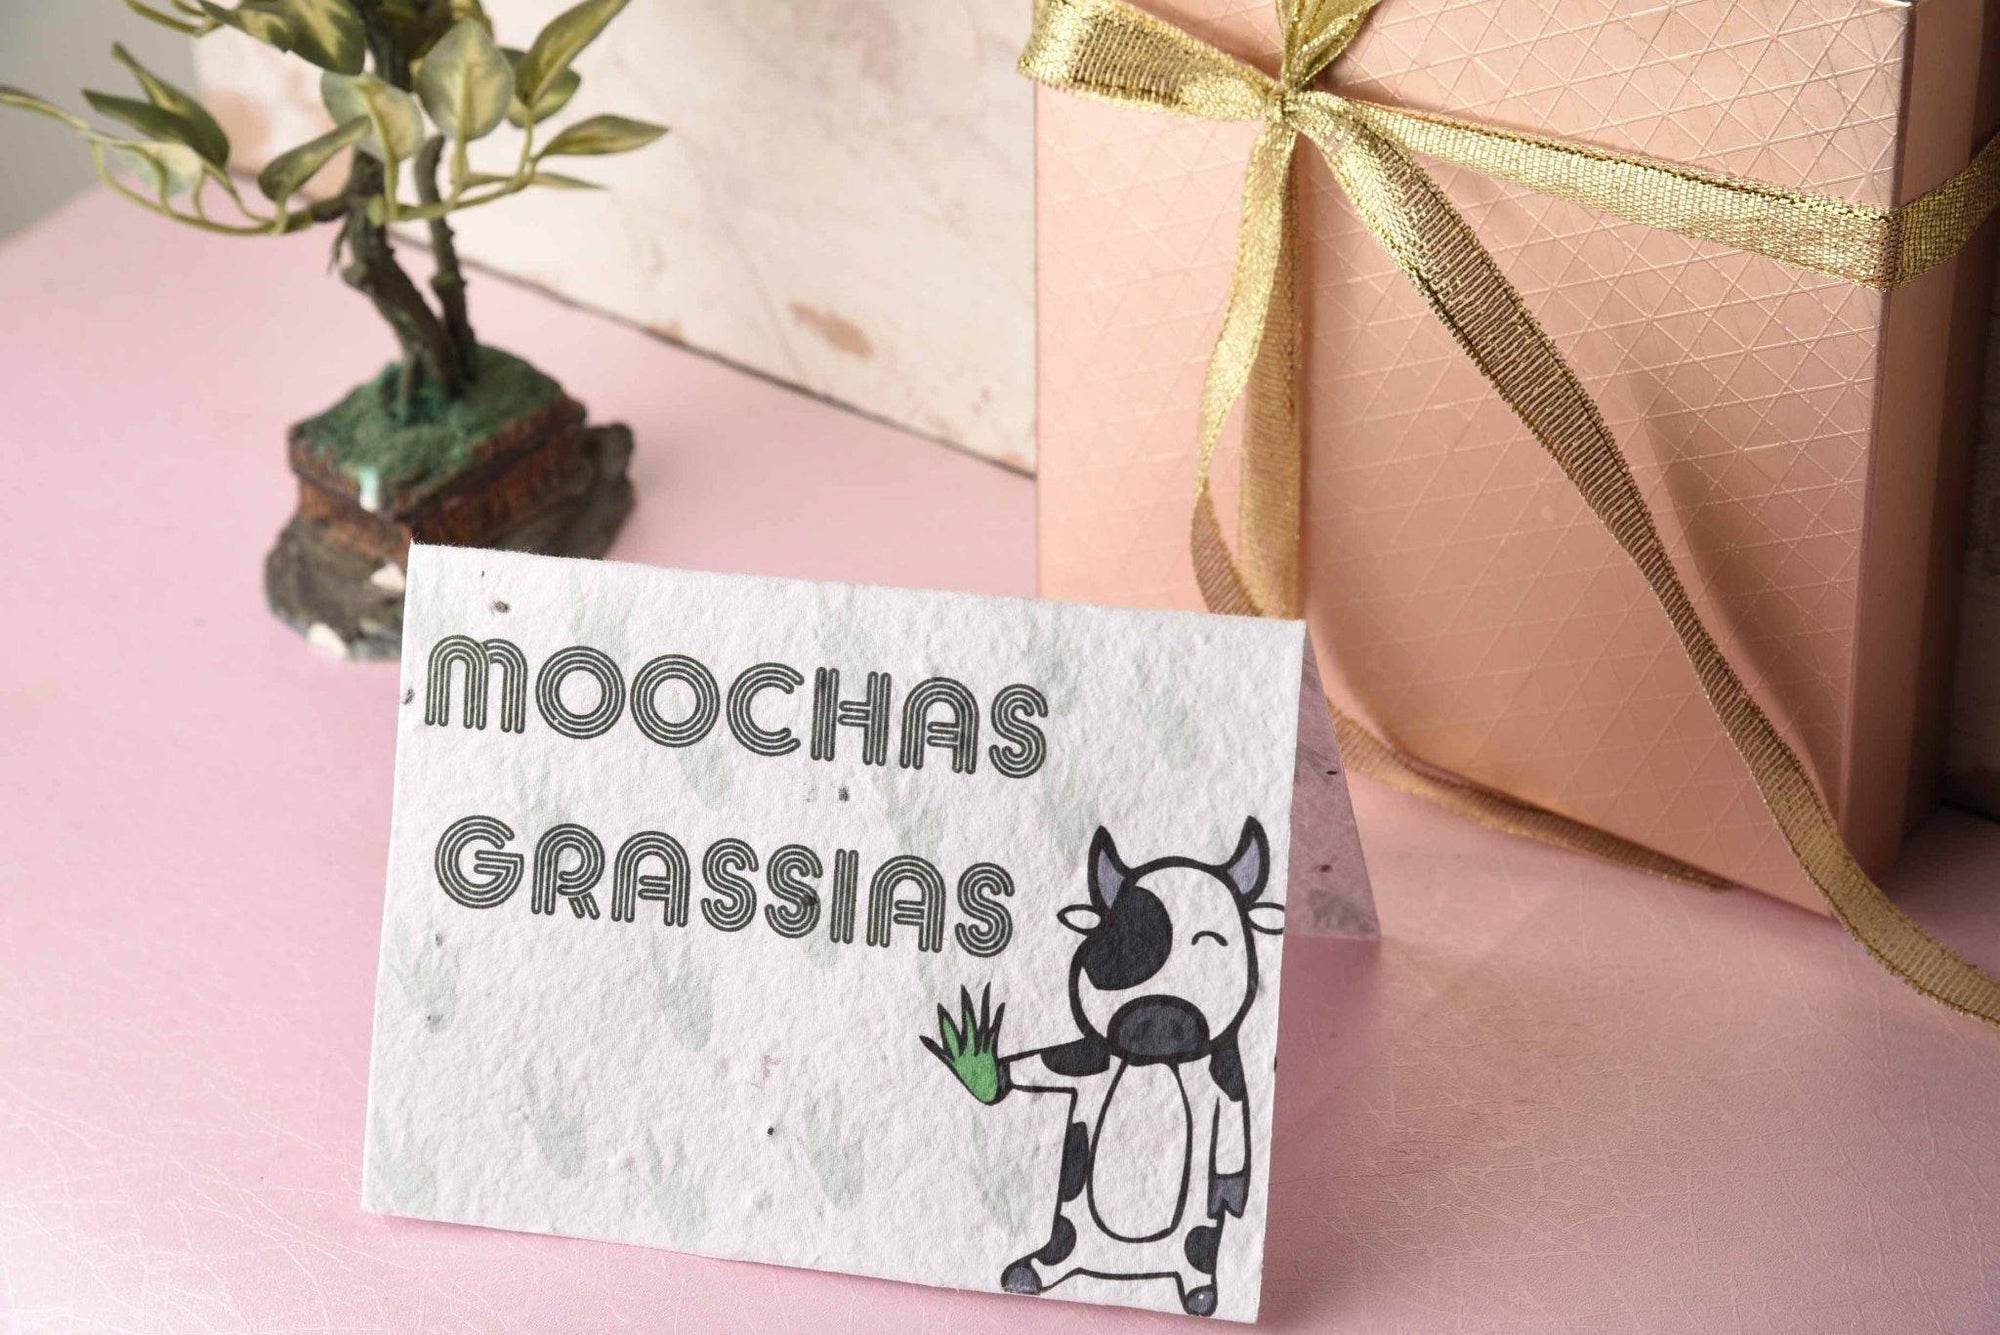  A beautiful greeting card with Moochas Grassias art